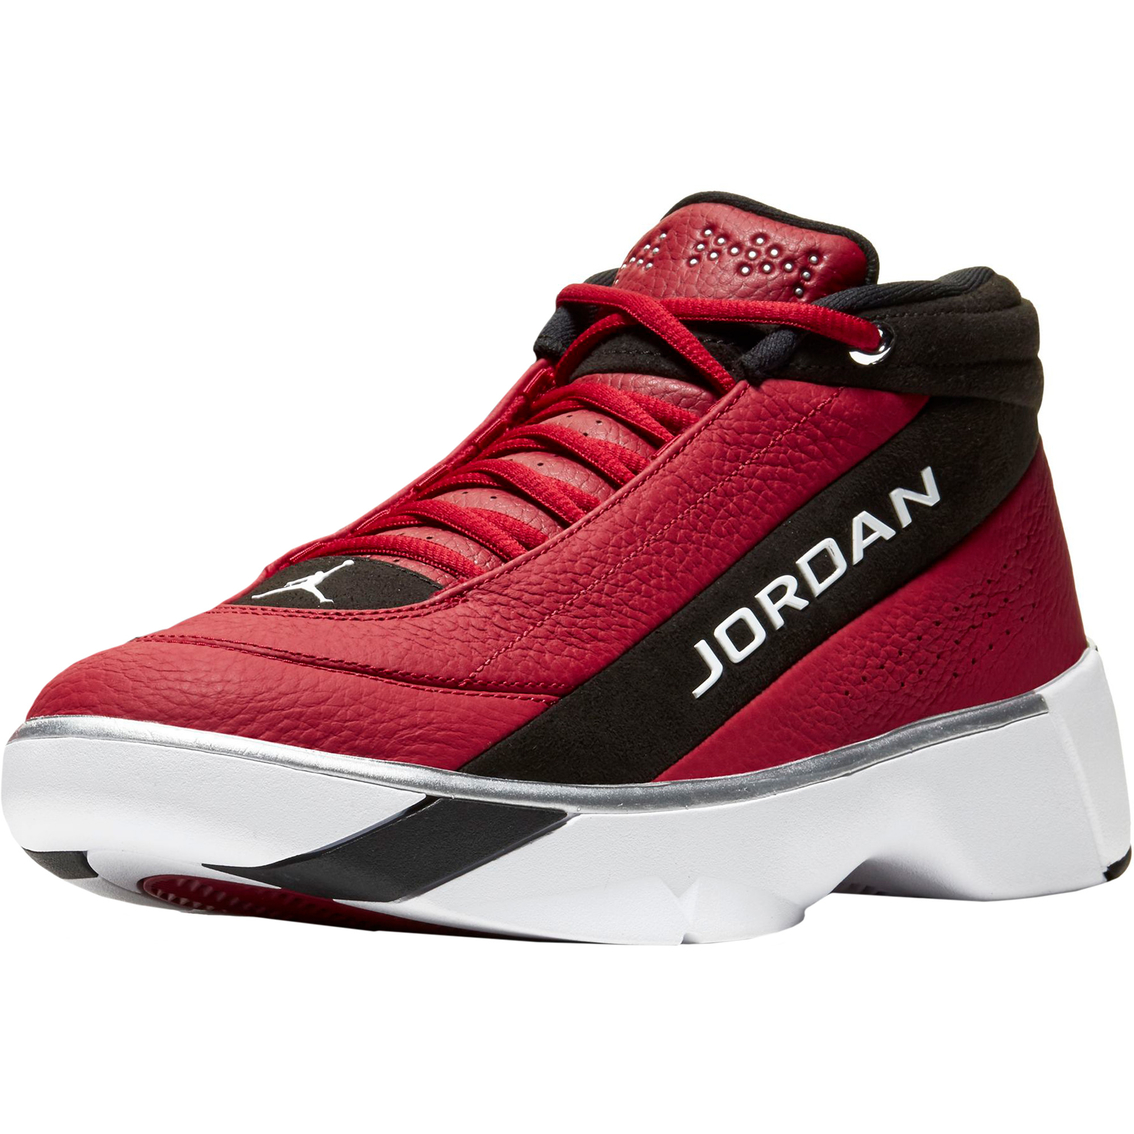 jordan team basketball shoes